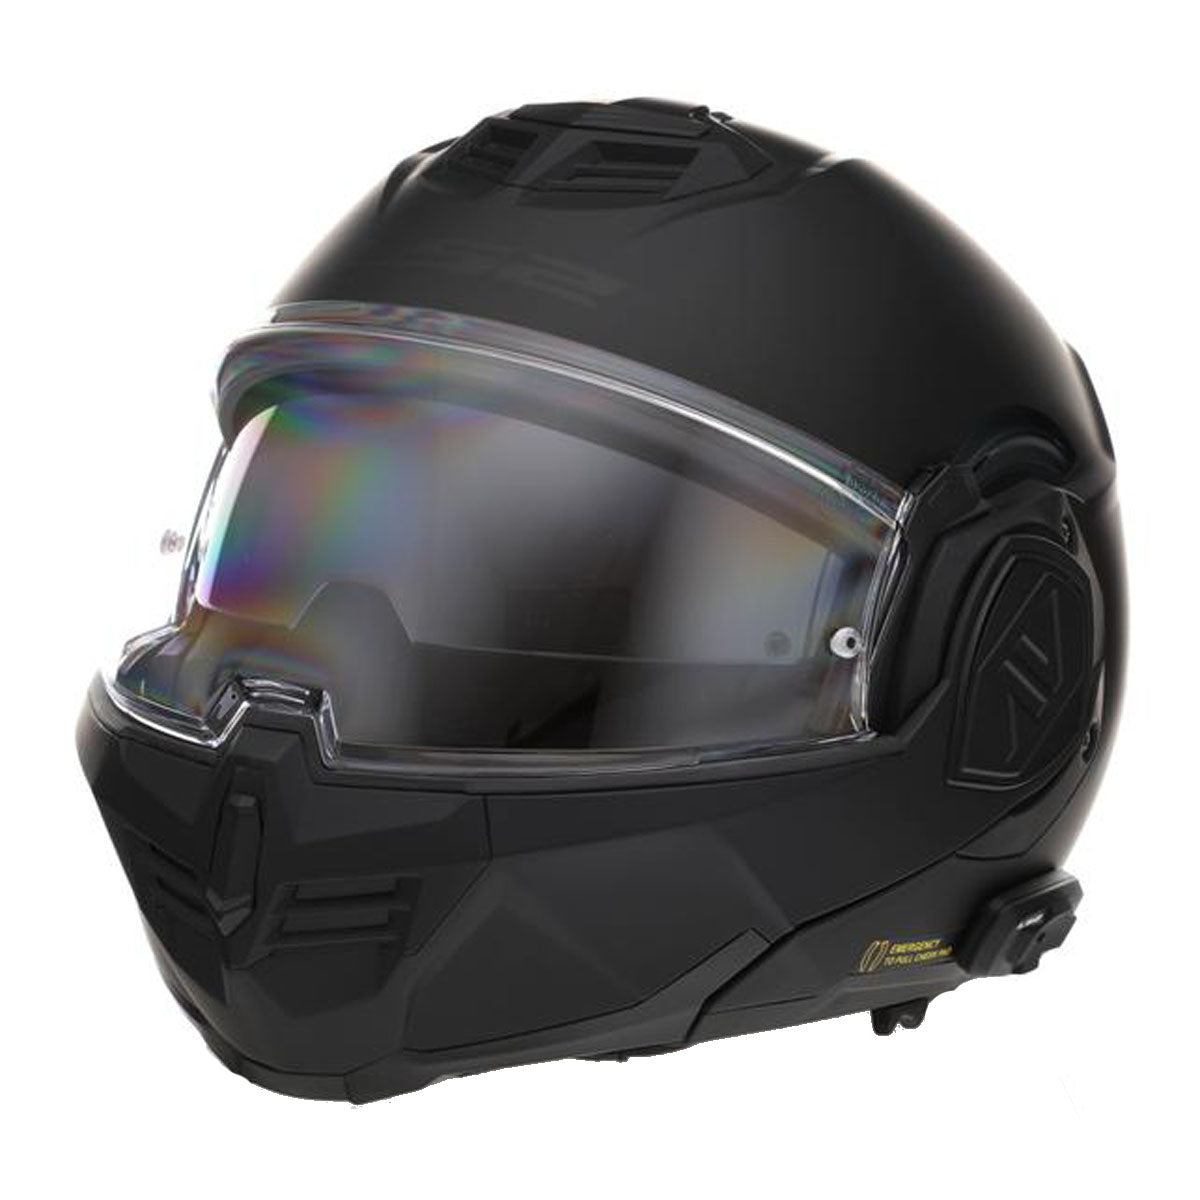 LS2 FF901 Advant X Carbon Solid Modular Helmet - New! Fast Shipping!